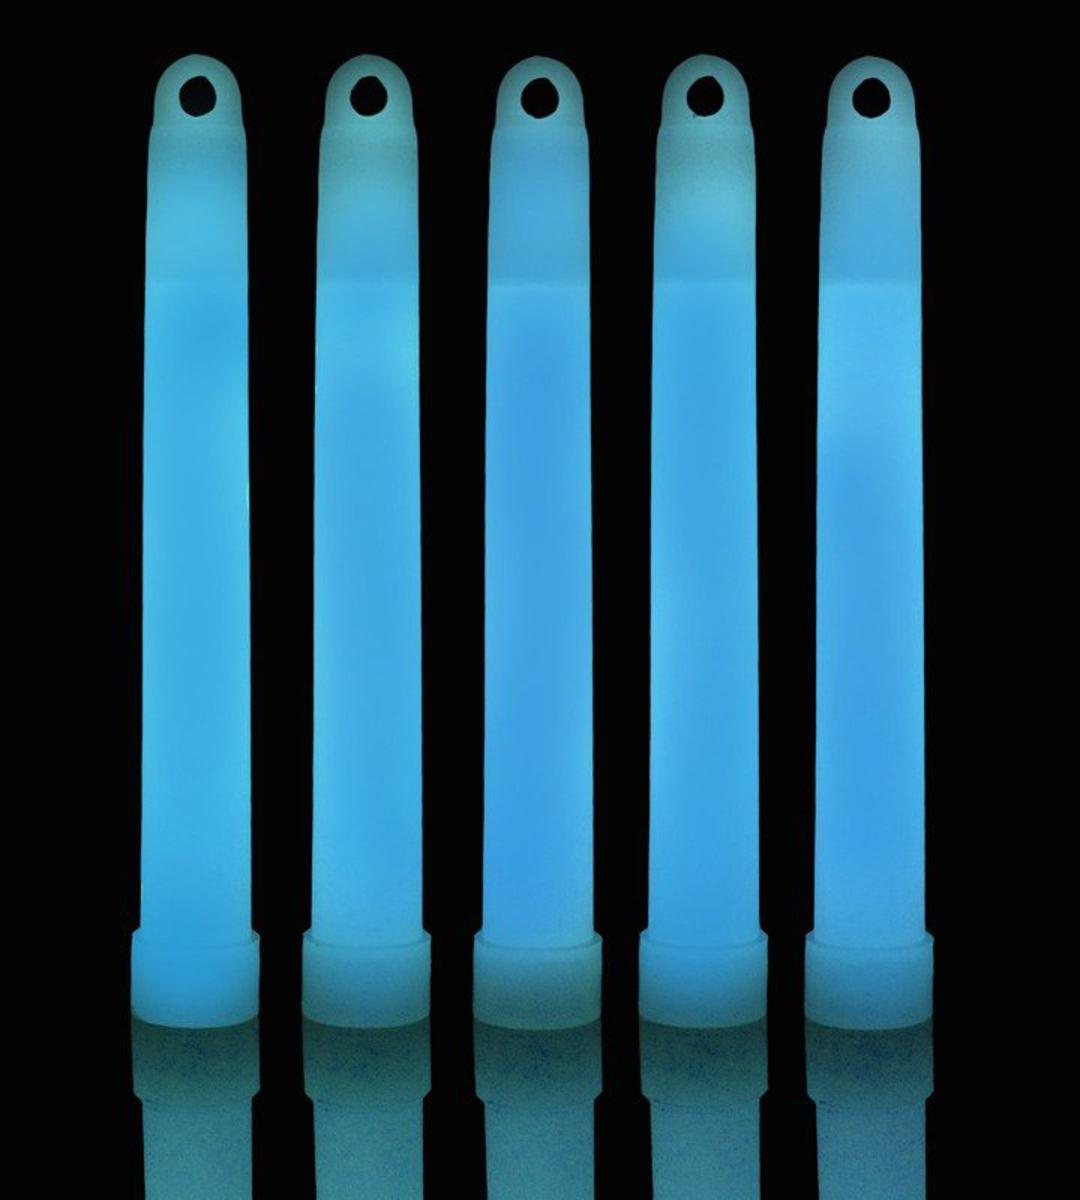 Bulk Glow Sticks - Wholesale Light Sticks